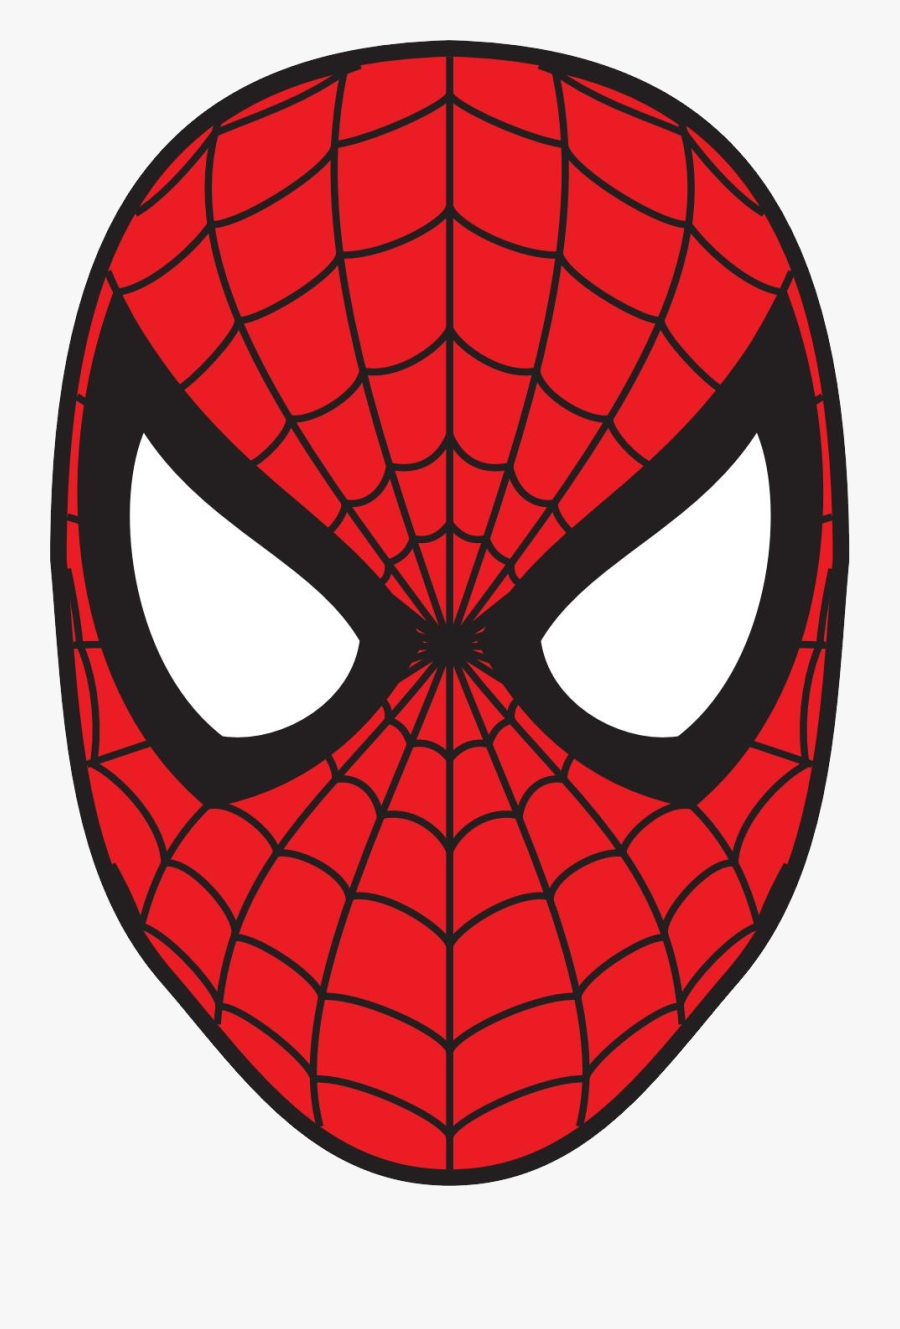 Spiderman Mask Png - Spider Man Face, Transparent Clipart